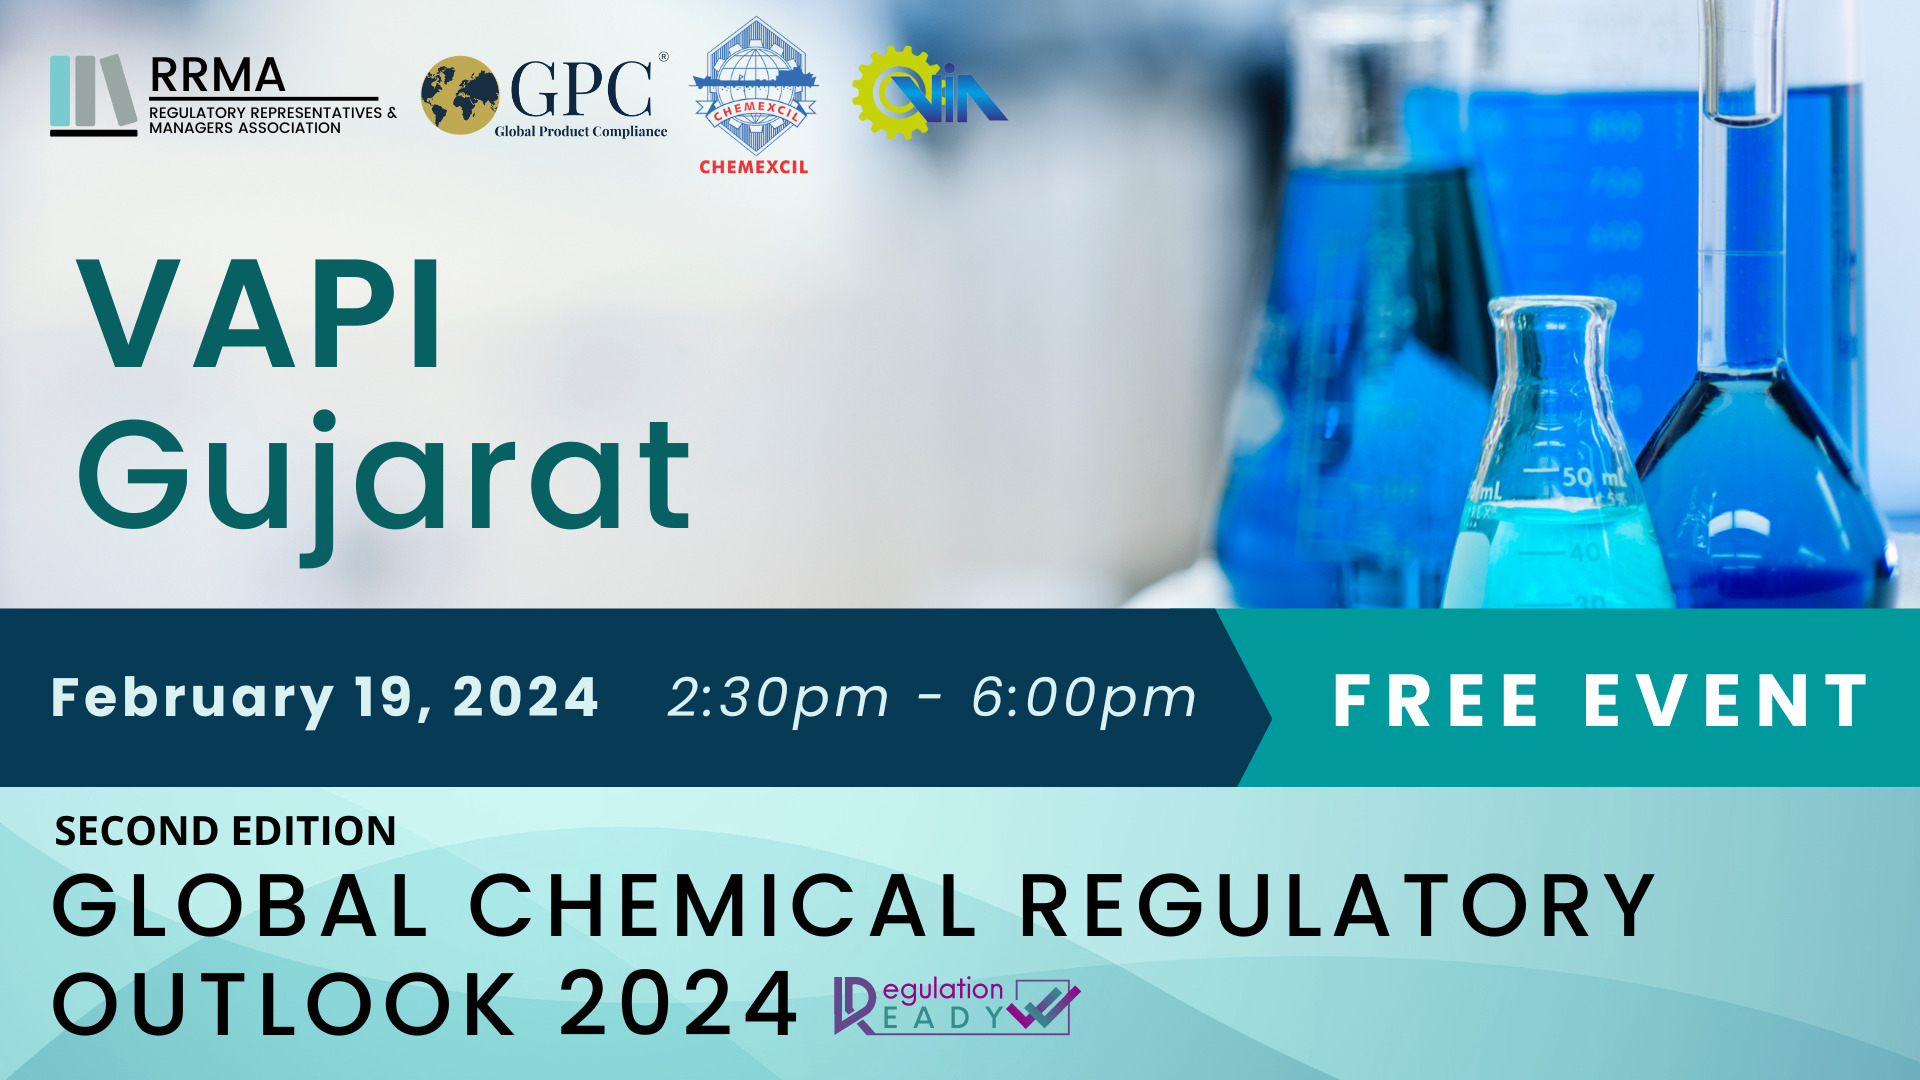 Global Chemical Regulatory Outlook 2024 at Vapi